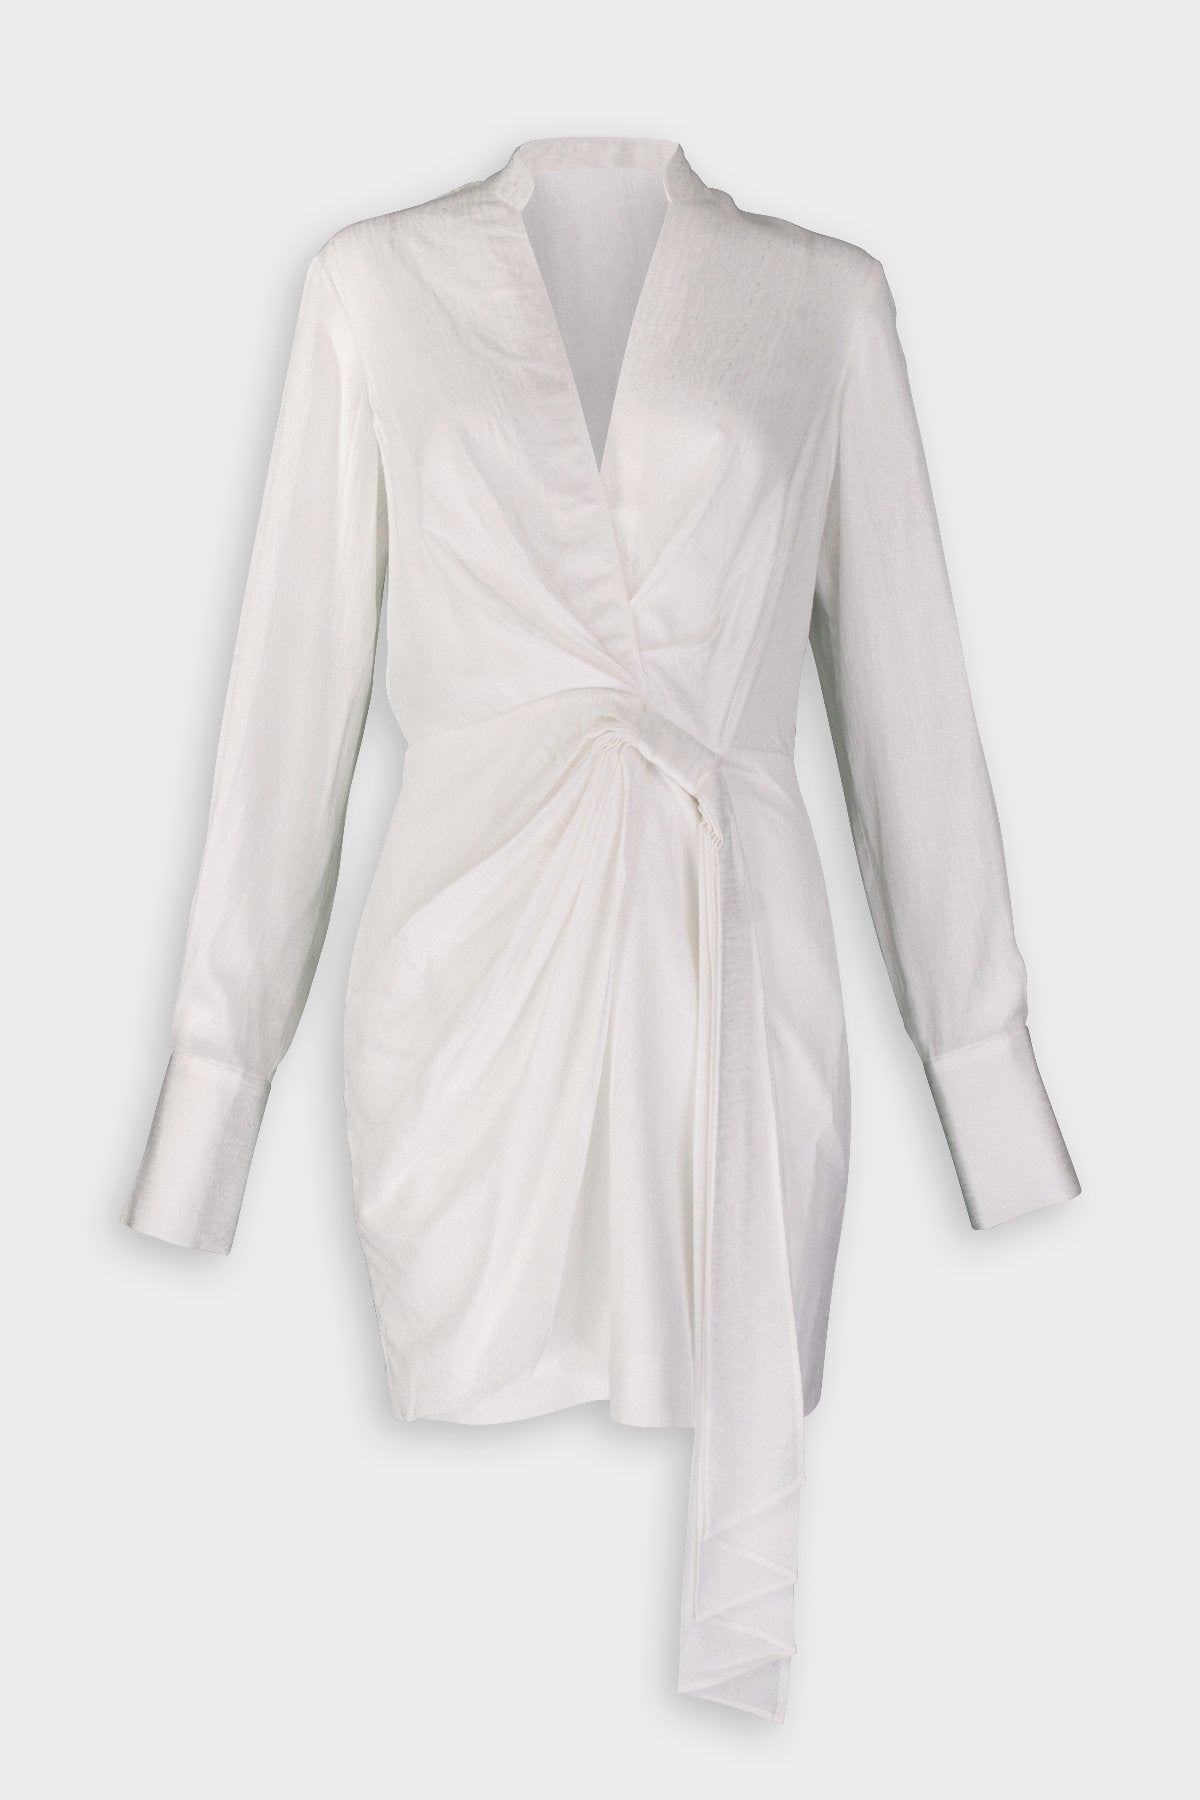 Amalfi Dress in Ivory - shop-olivia.com